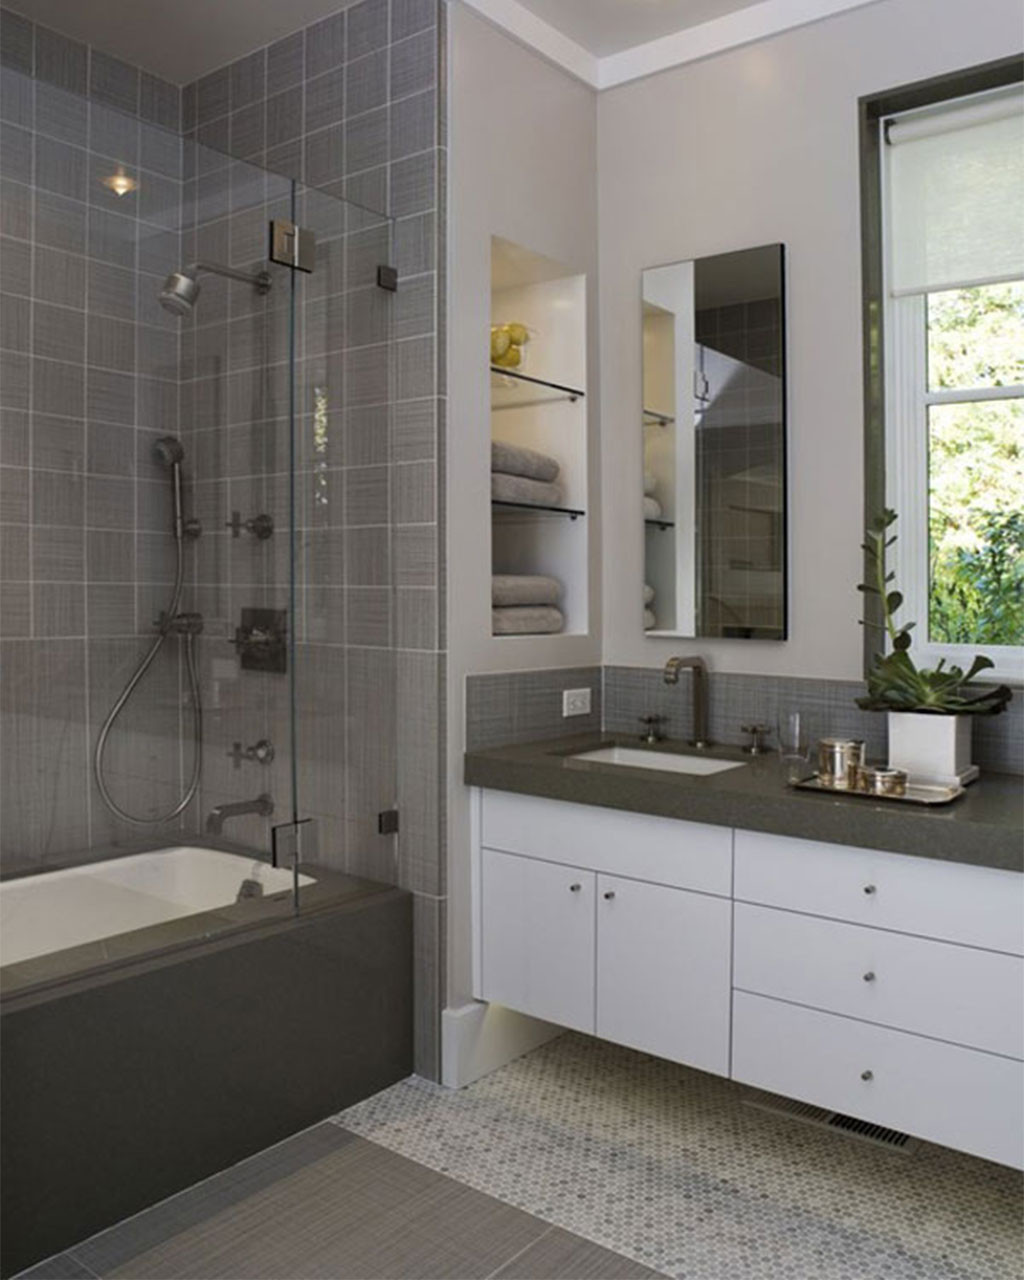 Bathroom Designs For Small Bathrooms
 30 Best Small Bathroom Ideas